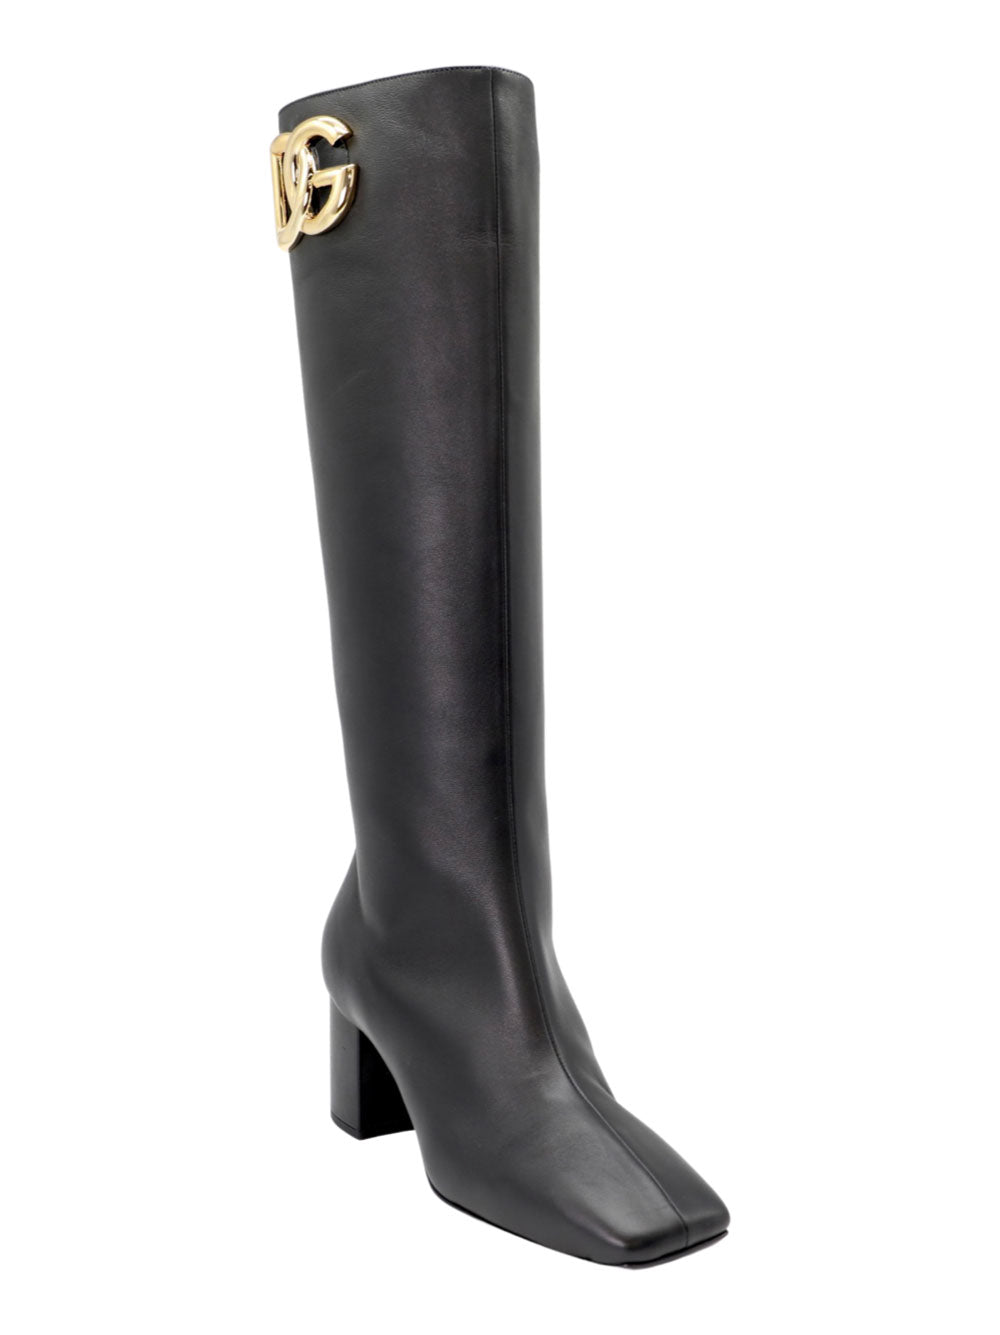 Dolce & Gabbana Stivale Tall Black Boot